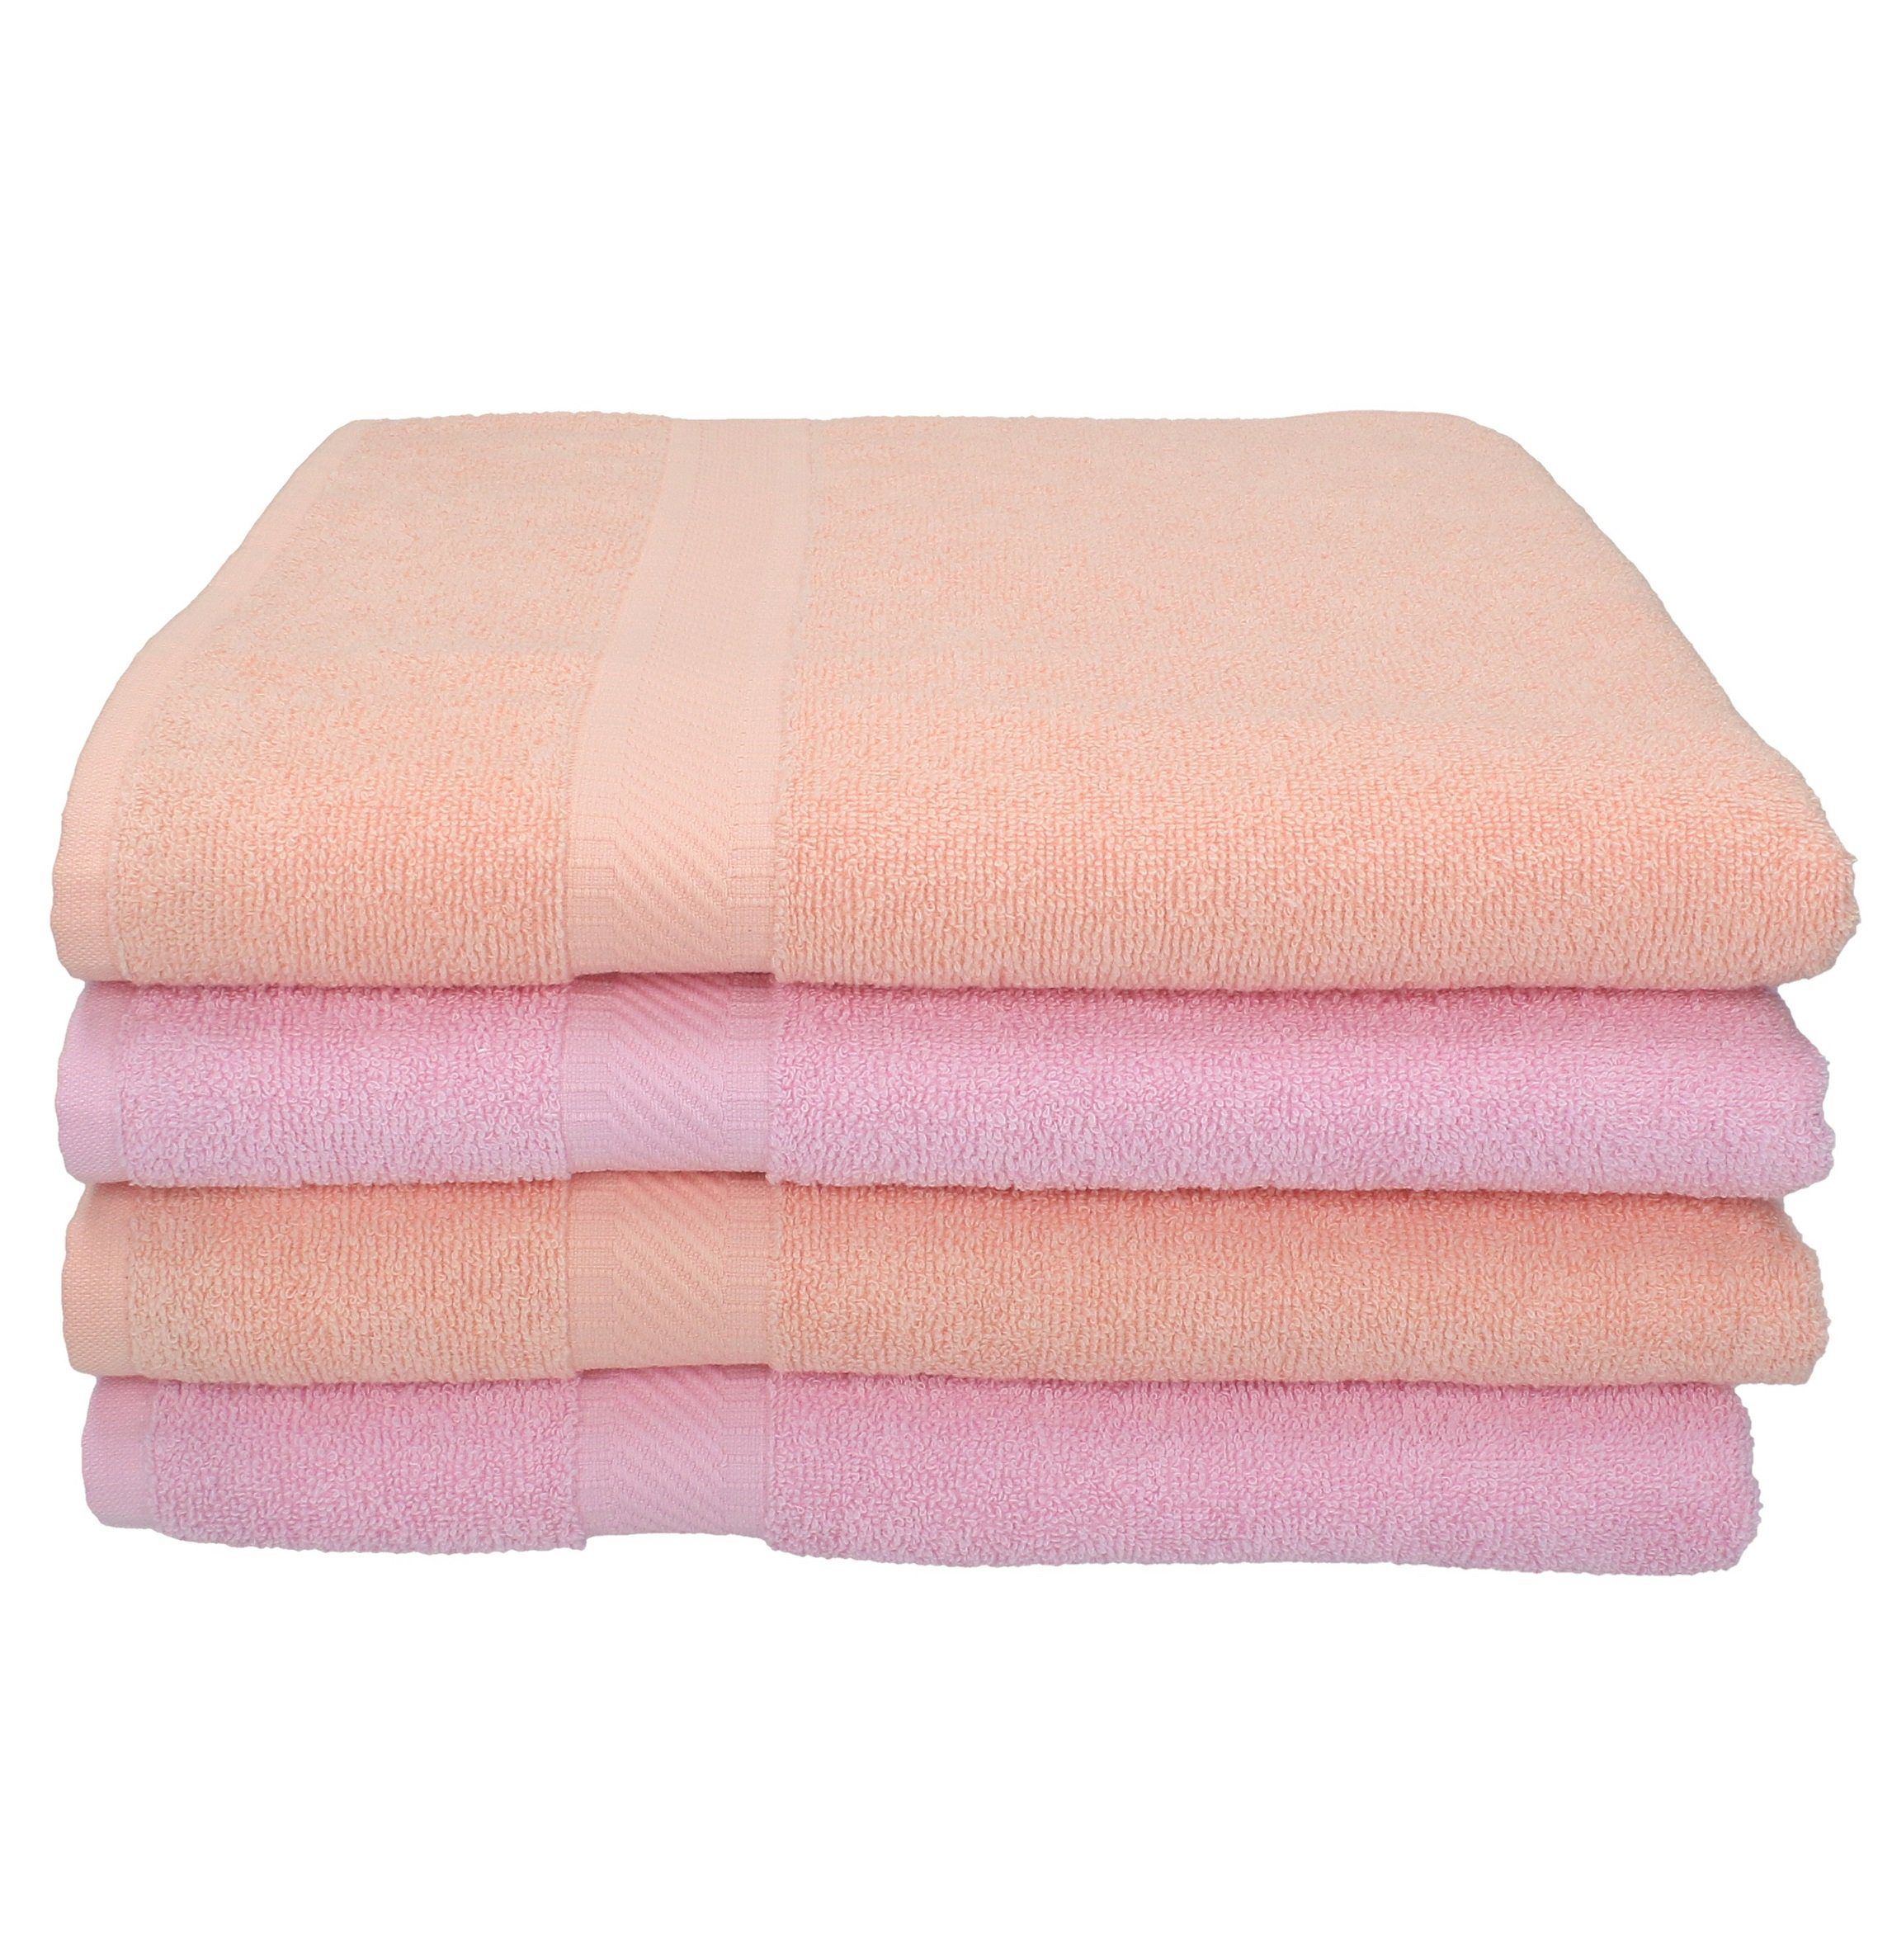 Baumwolle Palermo 4 x cm Set Stück Duschtücher Betz Duschtuch 100% Duschhandtuch Größe 70 rosé, Baumwolle und Farbe apricot Strandlaken 100% Duschtücher Badetuch 140